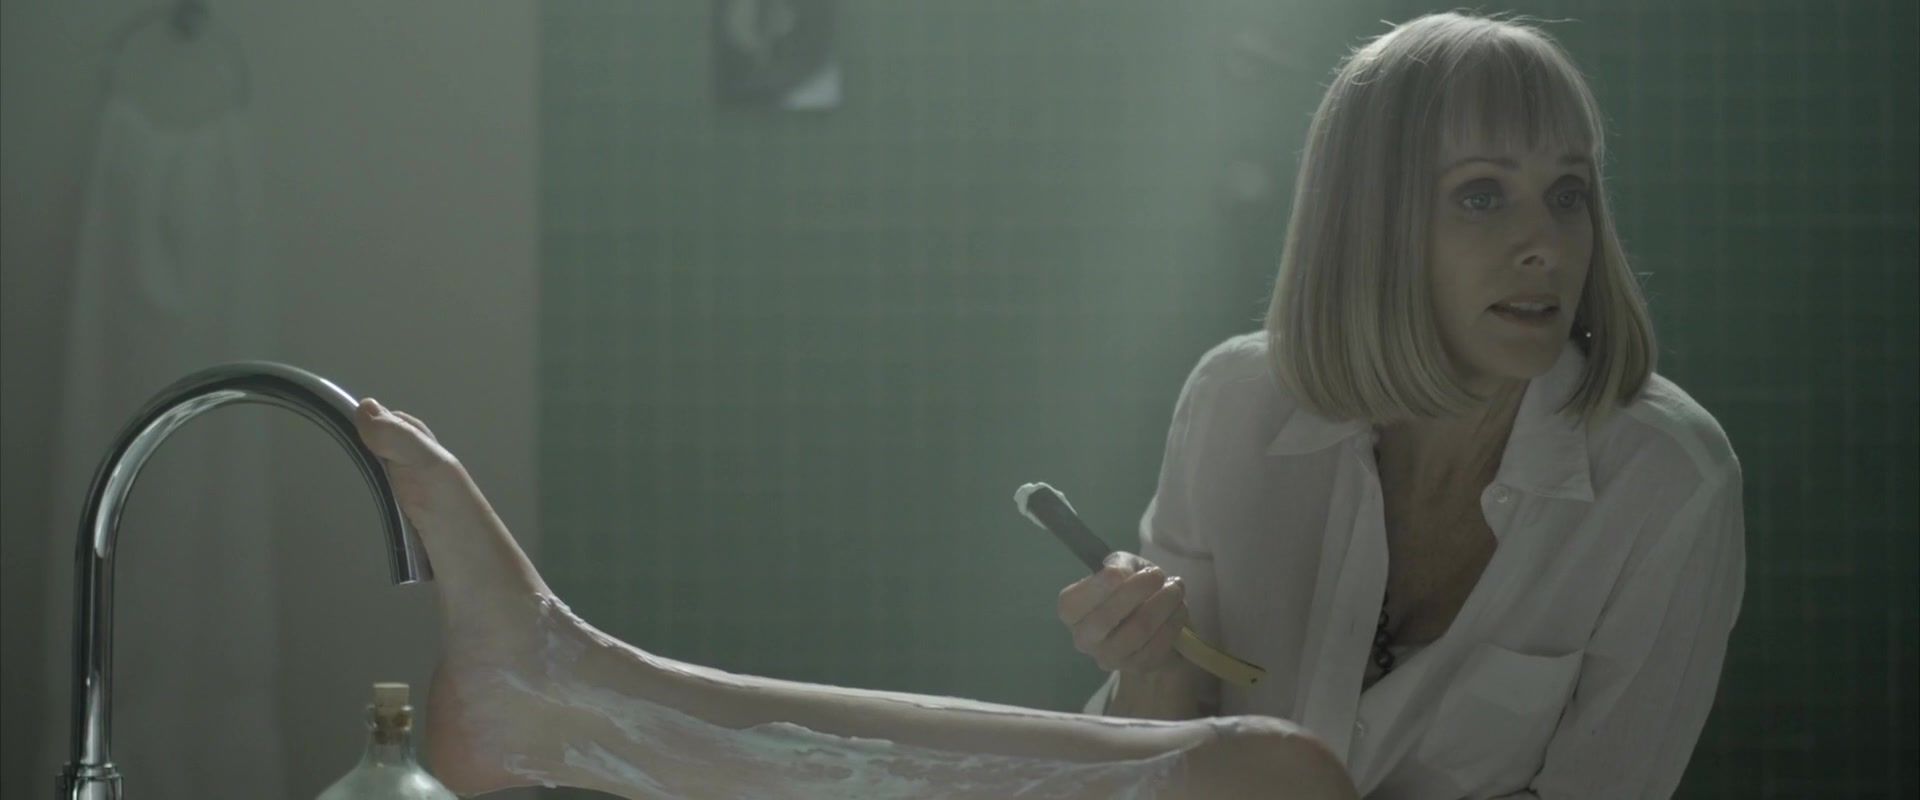 Lezbi Shaving legs and a nude scene in the bathroom with topless celebrity Sara Malakul of the movie "Sun Choke" Bottom